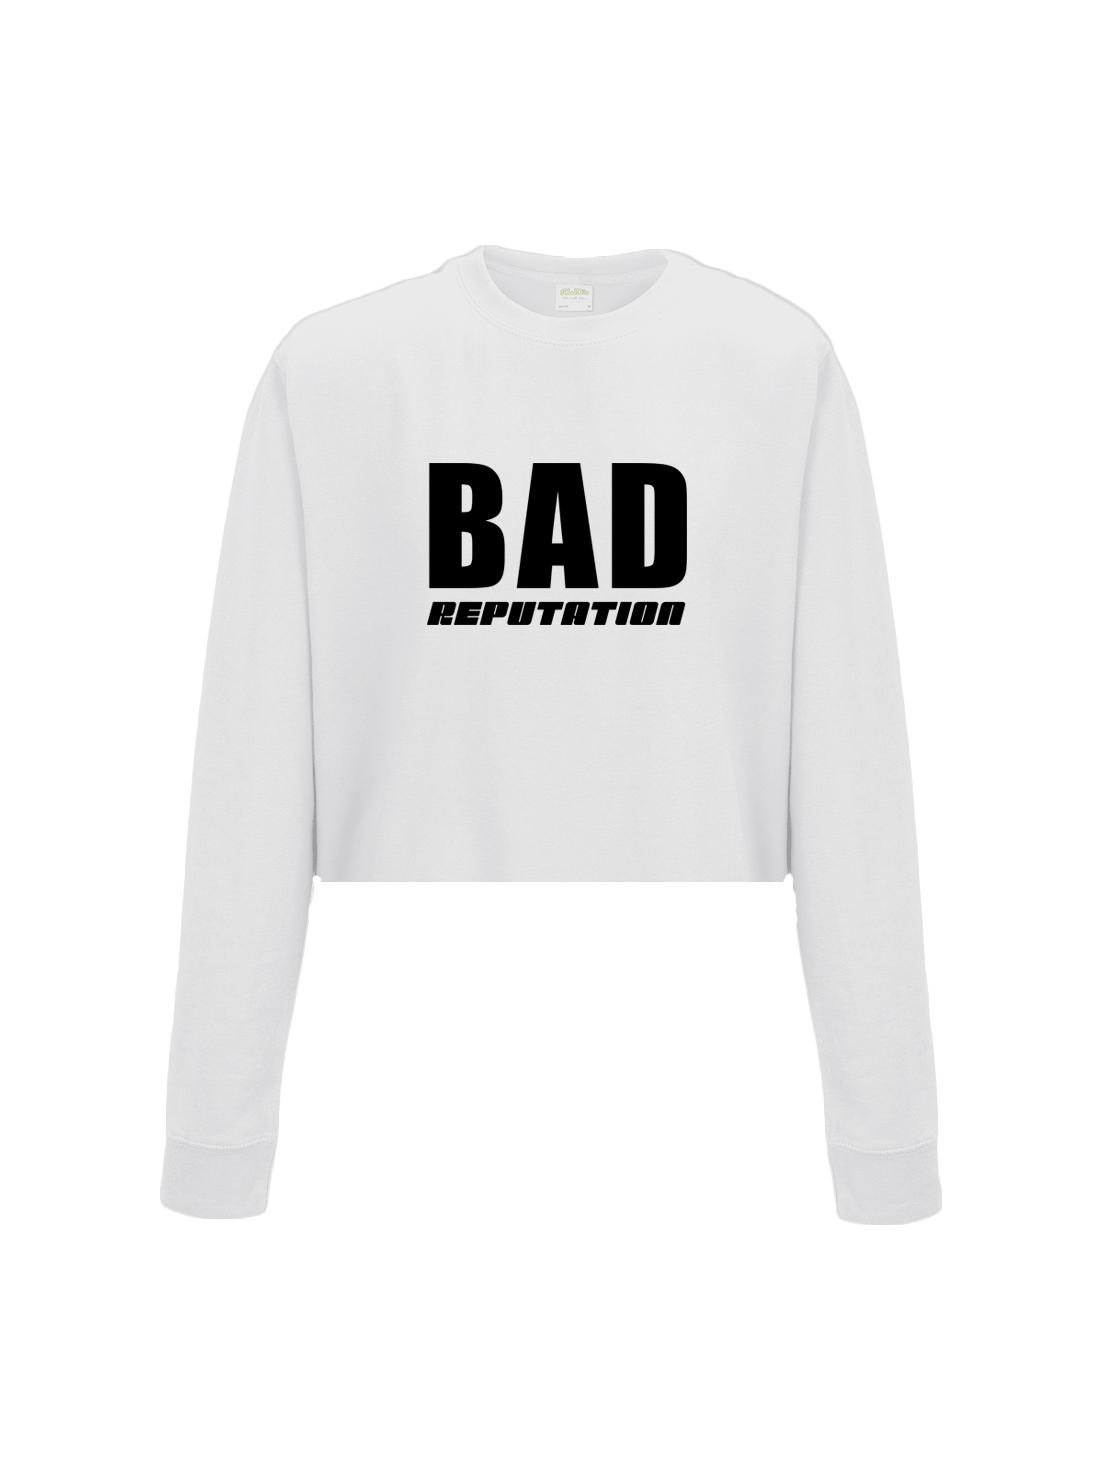 BAD REPUTATION cropped sweatshirt